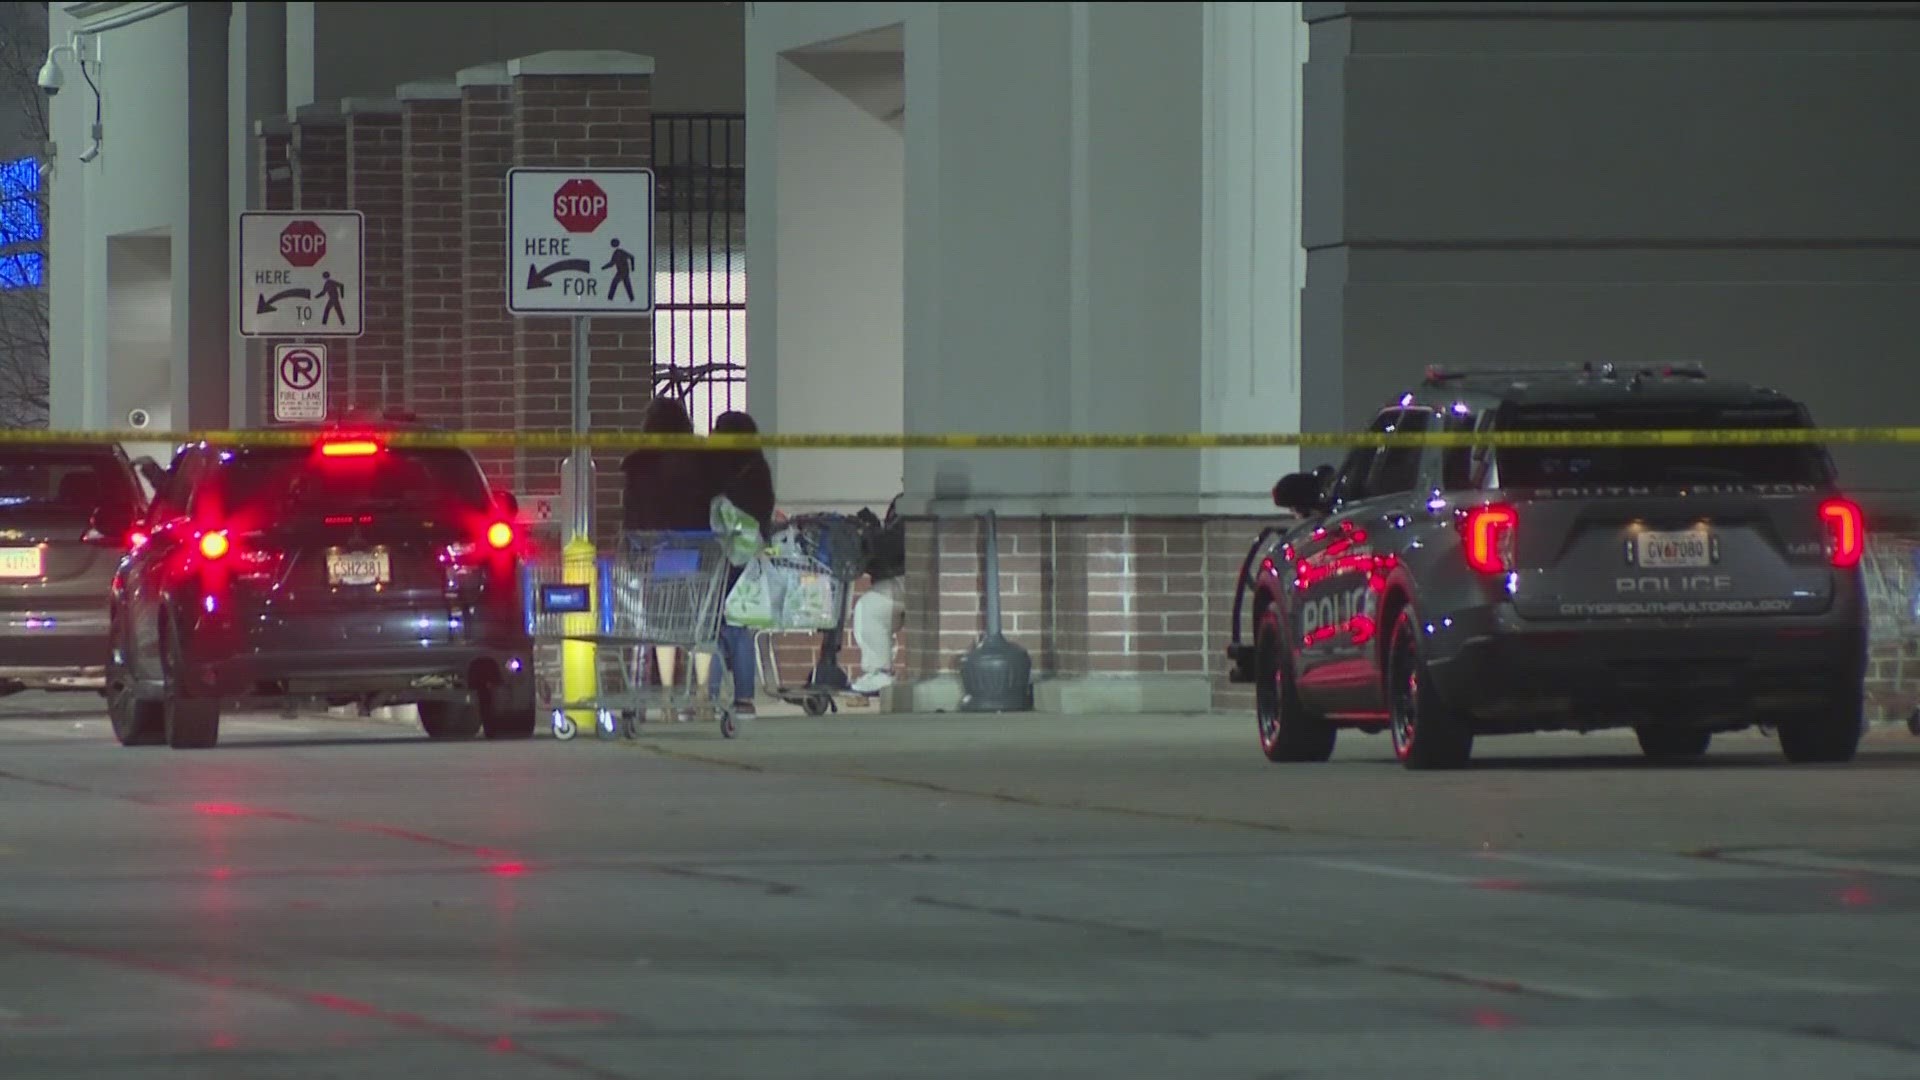 A witness told 11Alive she heard gunshots erupting in the shopping center.